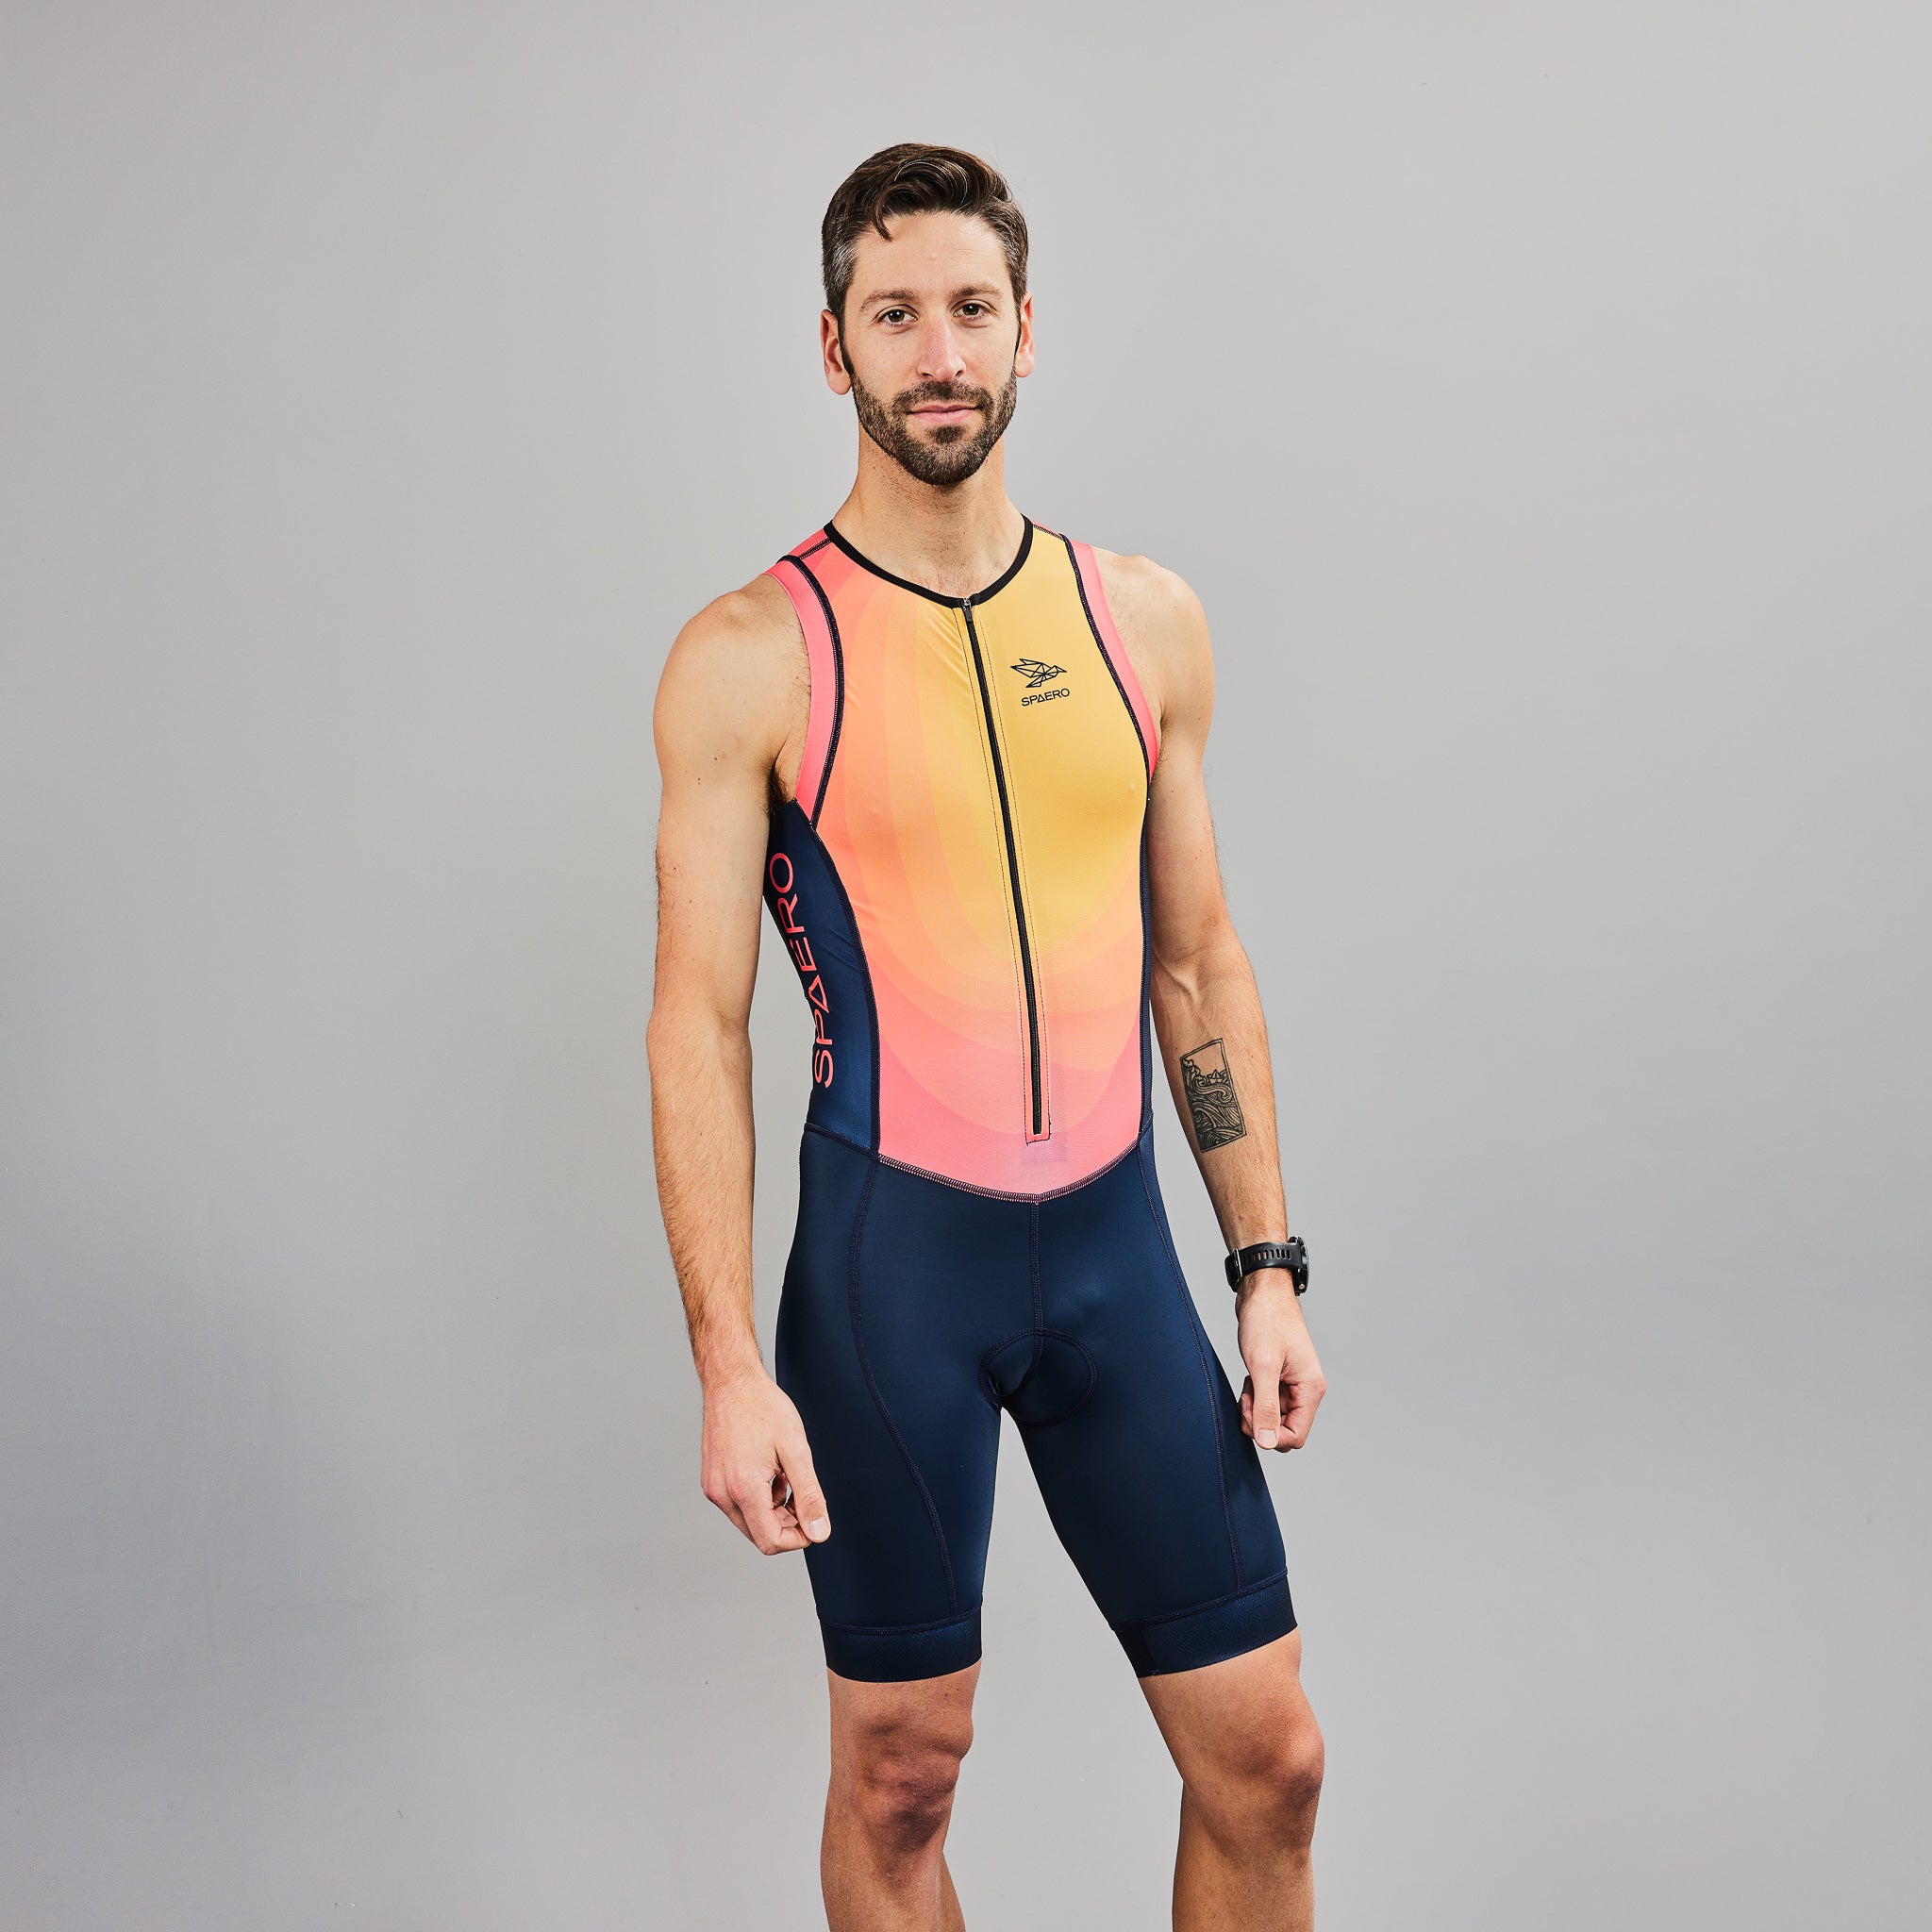 Men's Kona II Triathlon Race Suit with BONUS Race Belt – Kona Tri Apparel